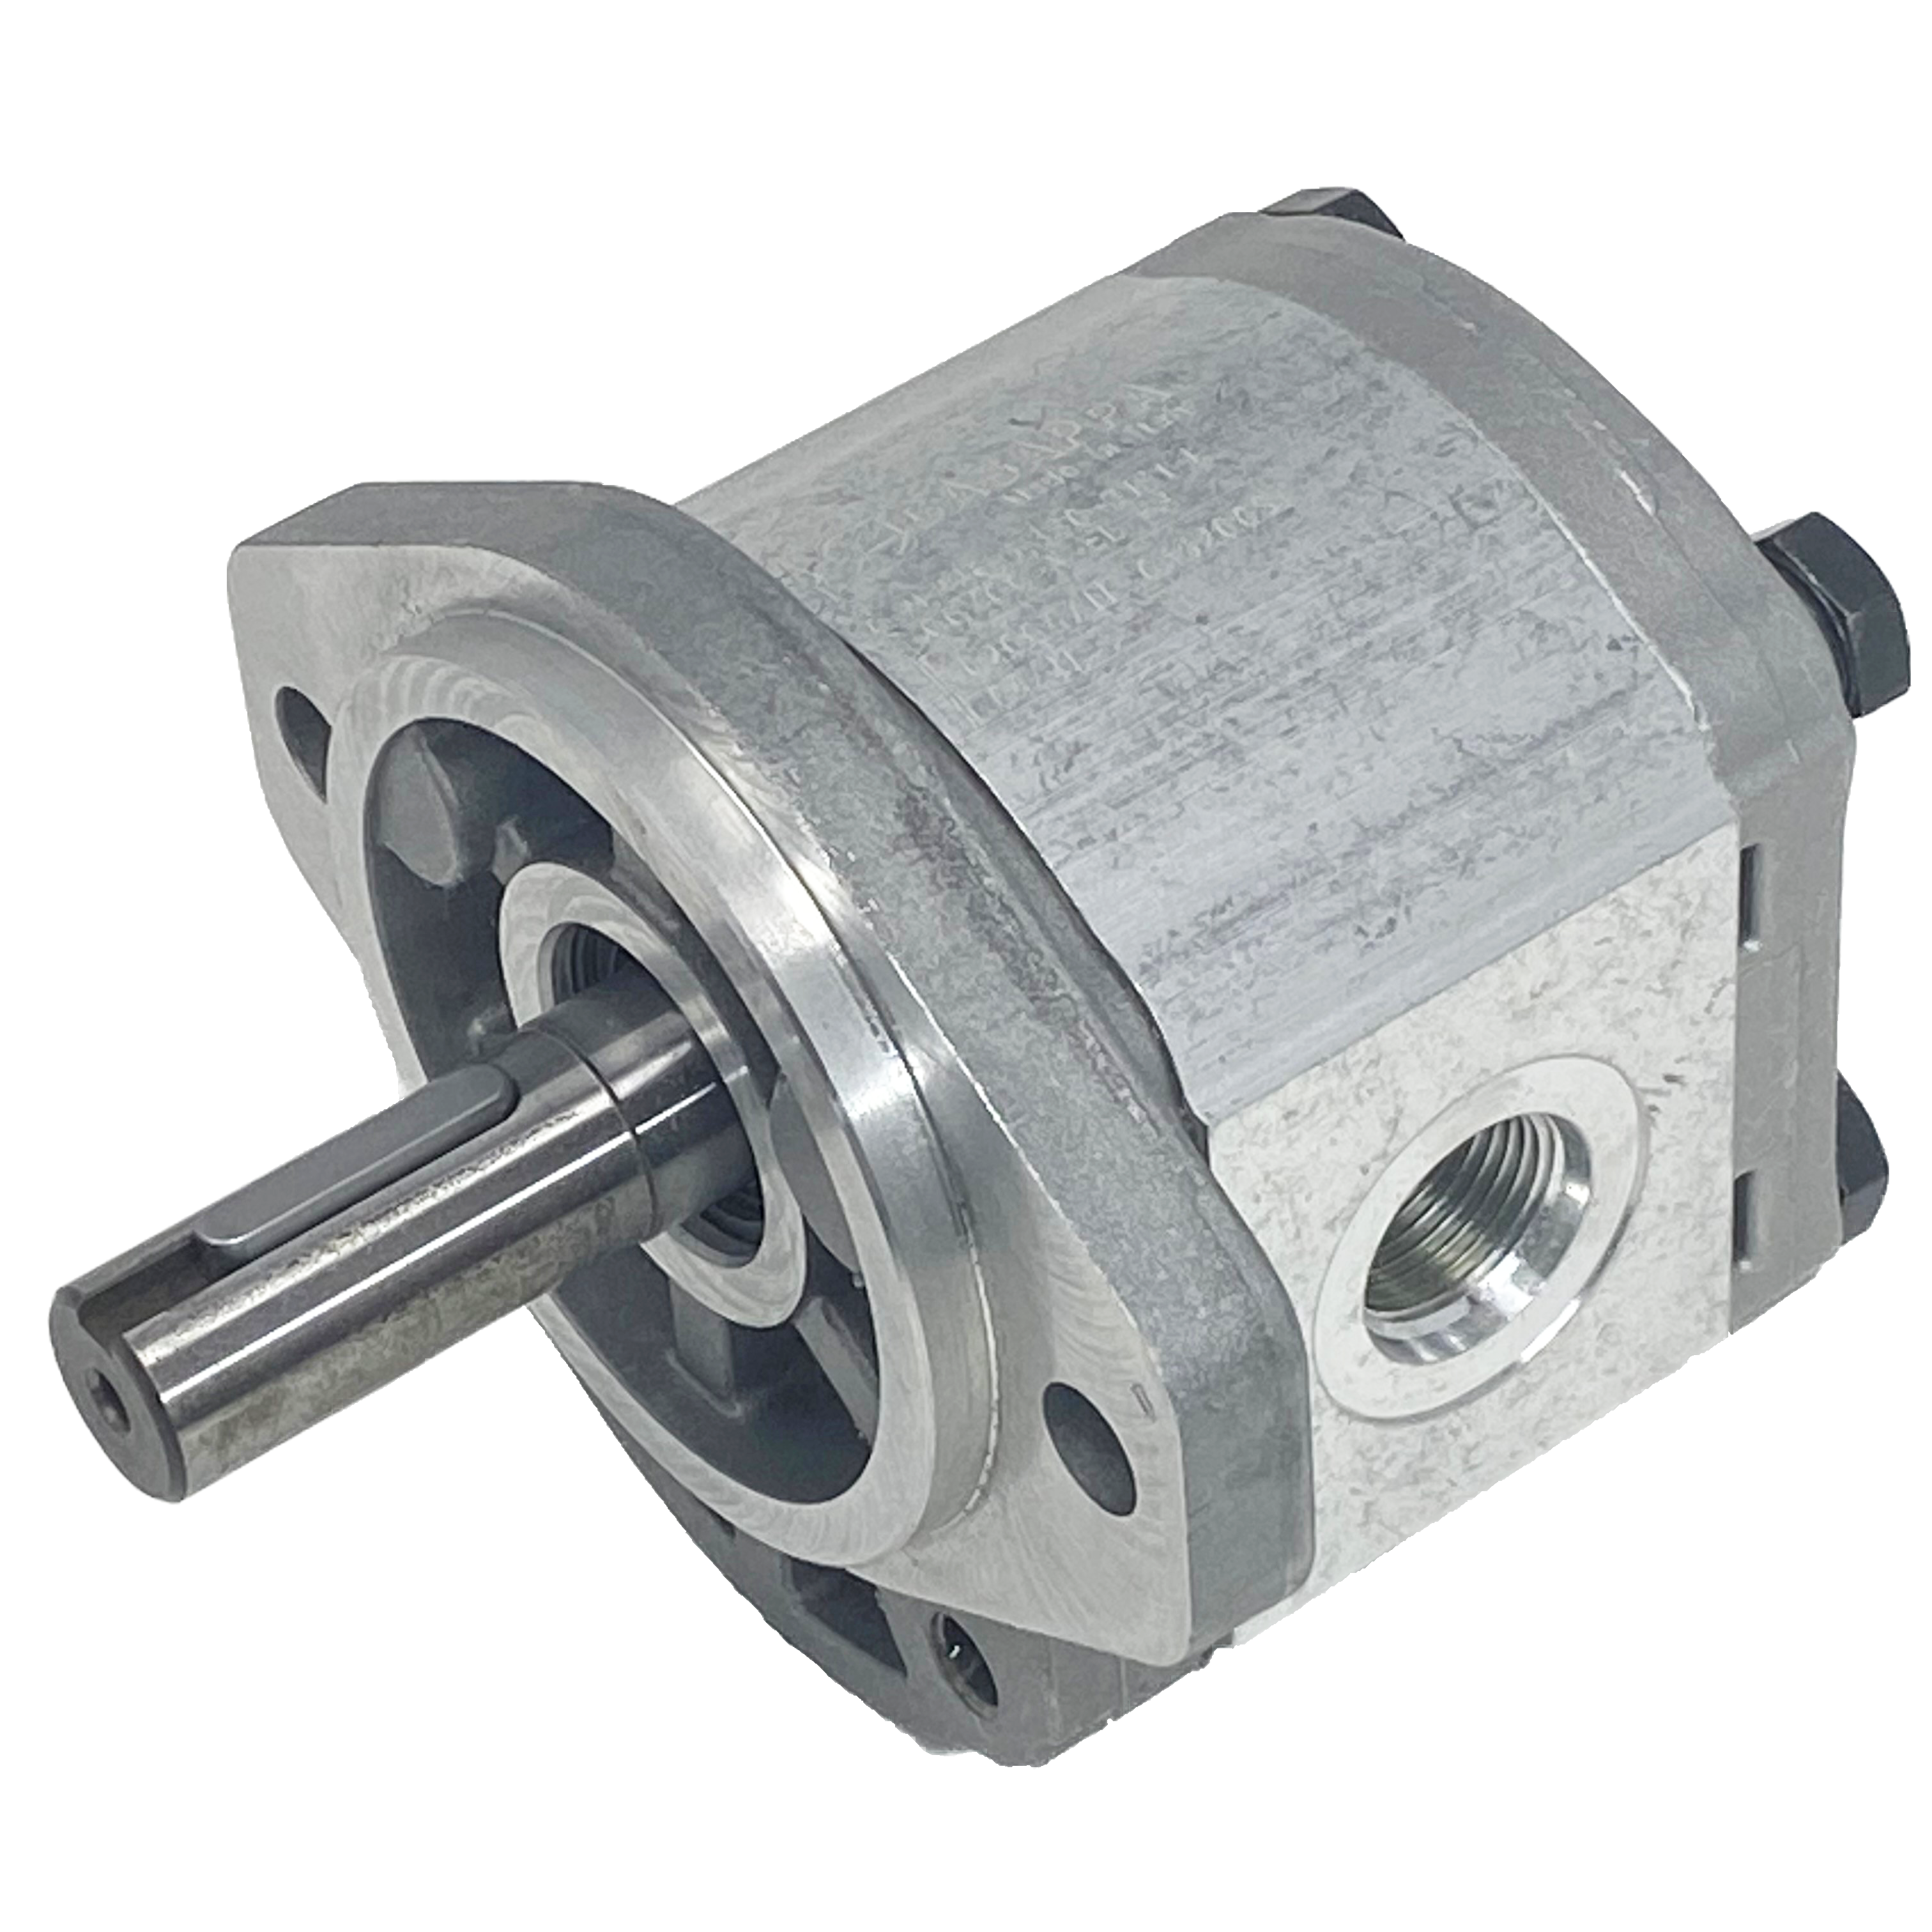 PLP20.9D0-49S1-LOC/OC-N-EL : Casappa Polaris Gear Pump, 9.17cc, 3625psi Rated, 3500RPM, CW, 3/4" Bore x 3/16" Key Shaft, SAE A 2-Bolt Flange, 0.625 (5/8") #10 SAE Inlet, 0.625 (5/8") #10 SAE Outlet, Aluminum Body & Flange